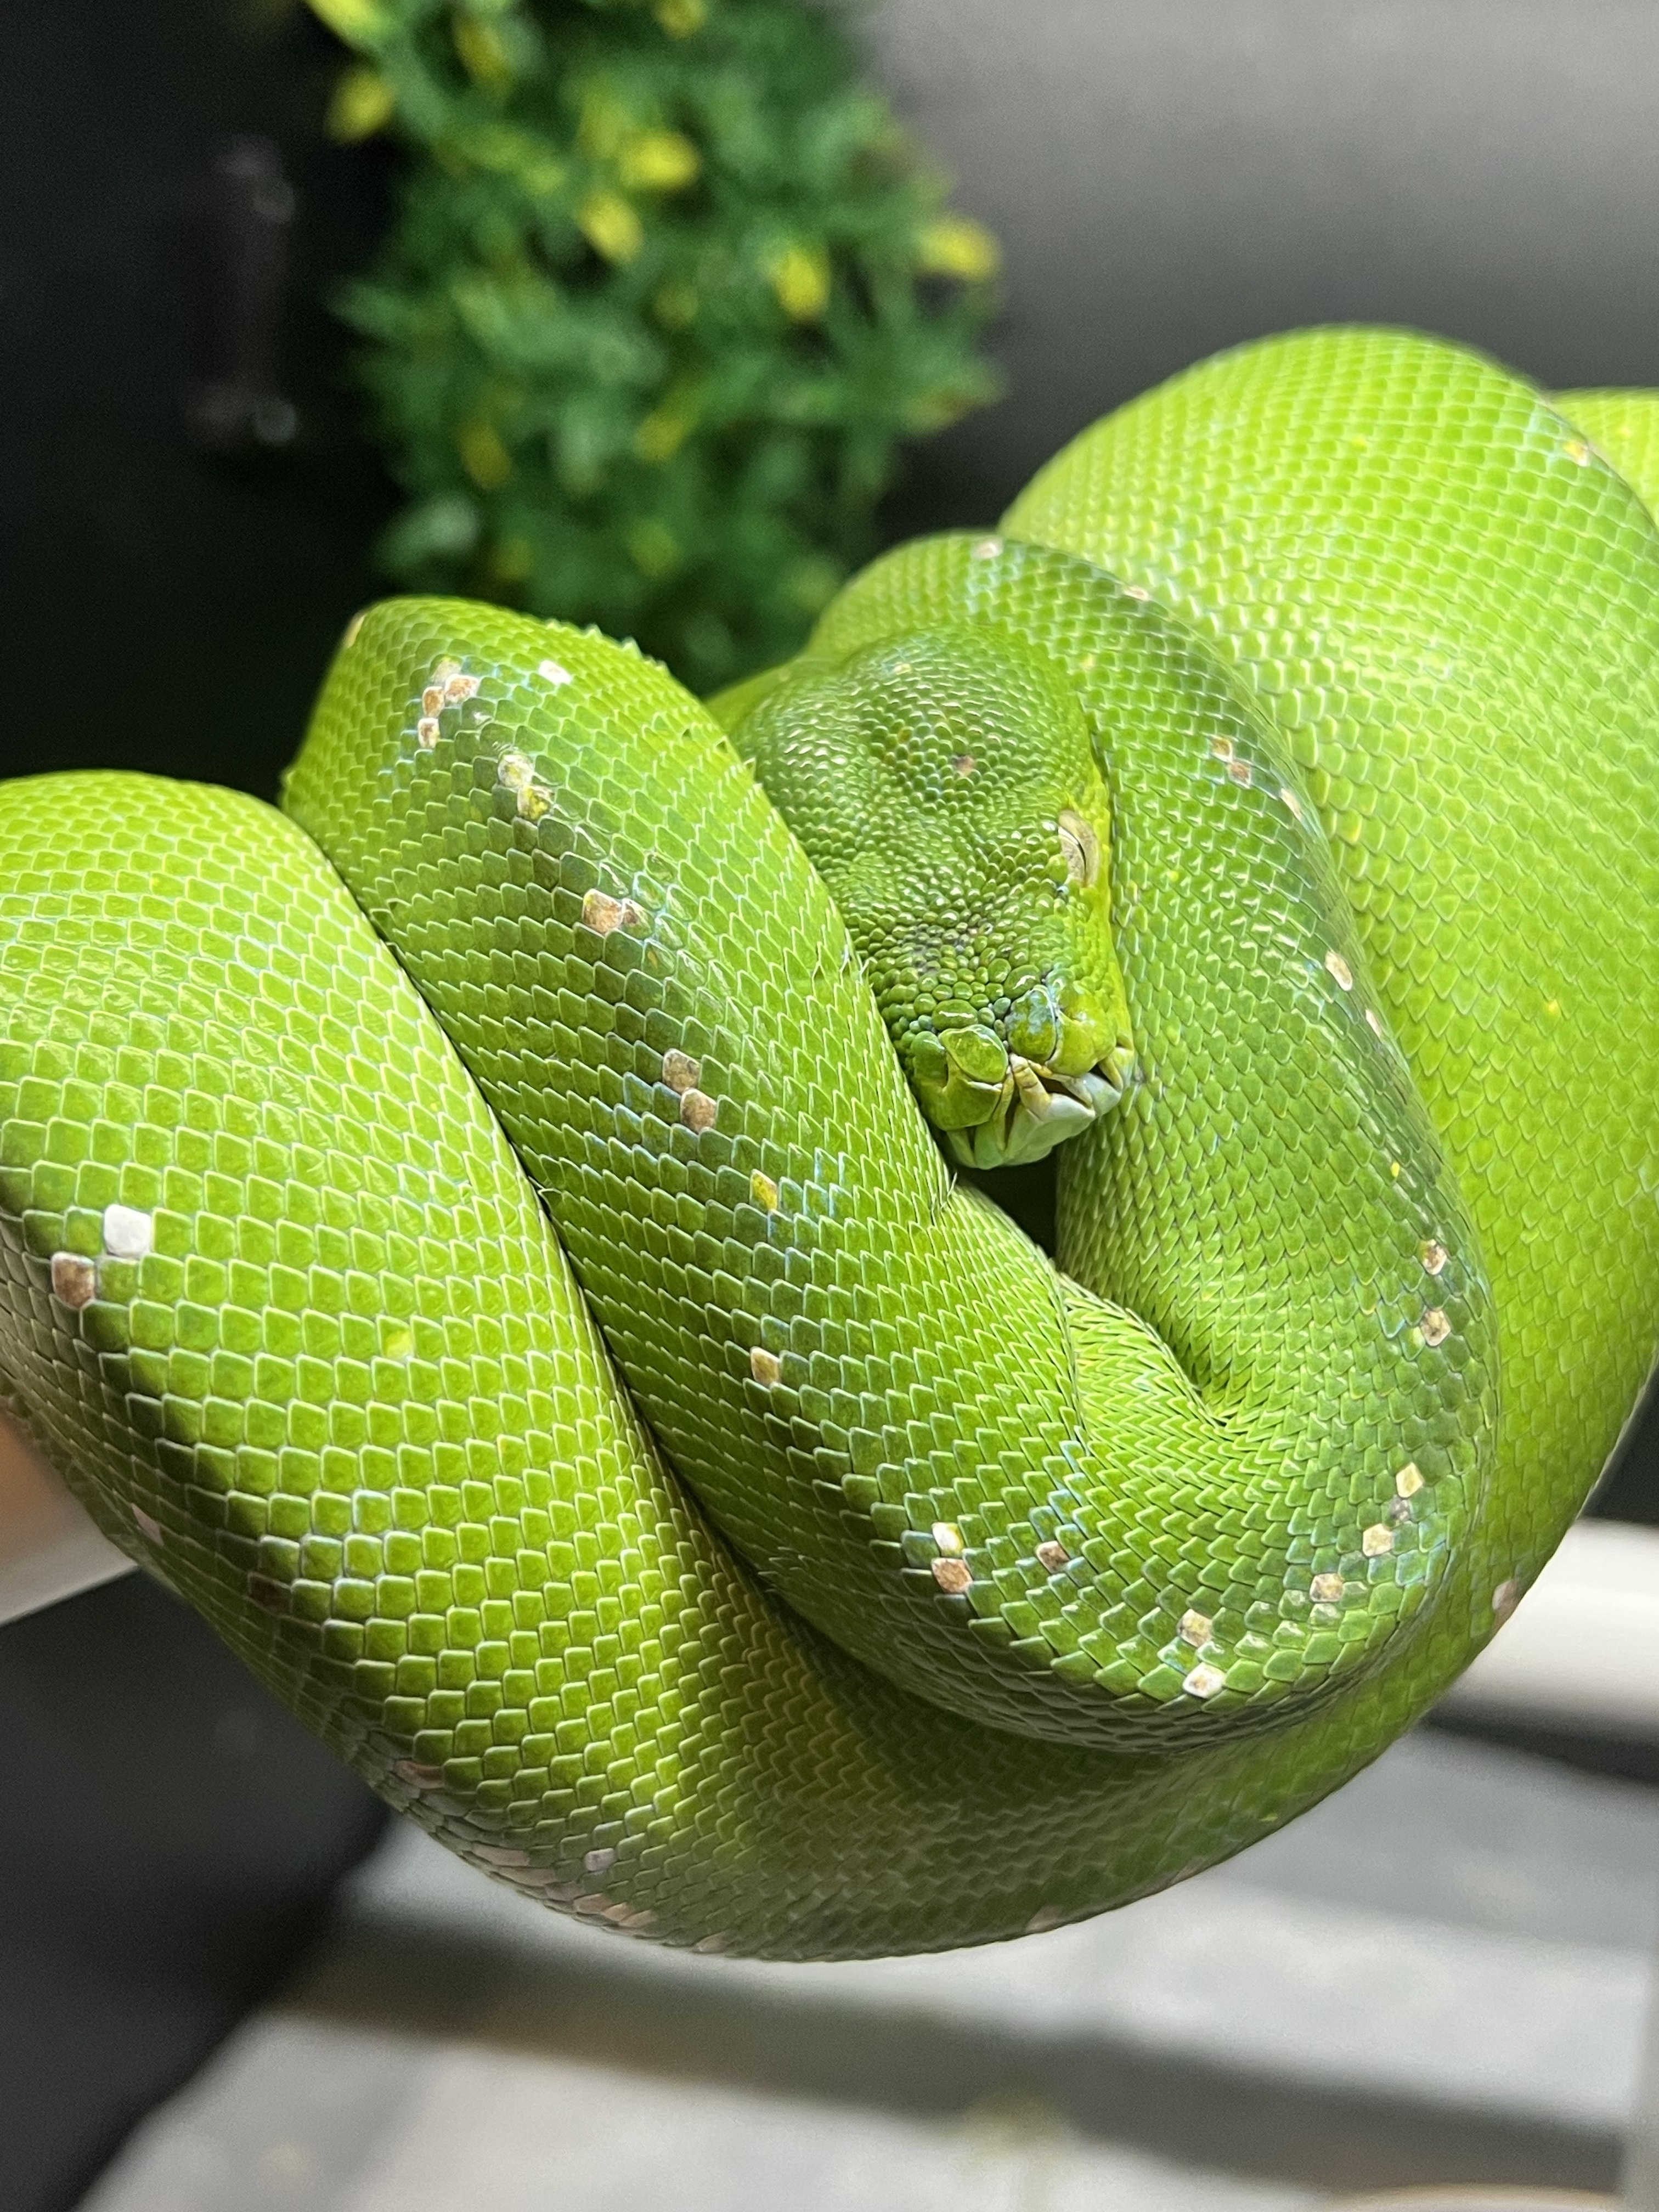 Aru Green Tree Python by T's Pythons